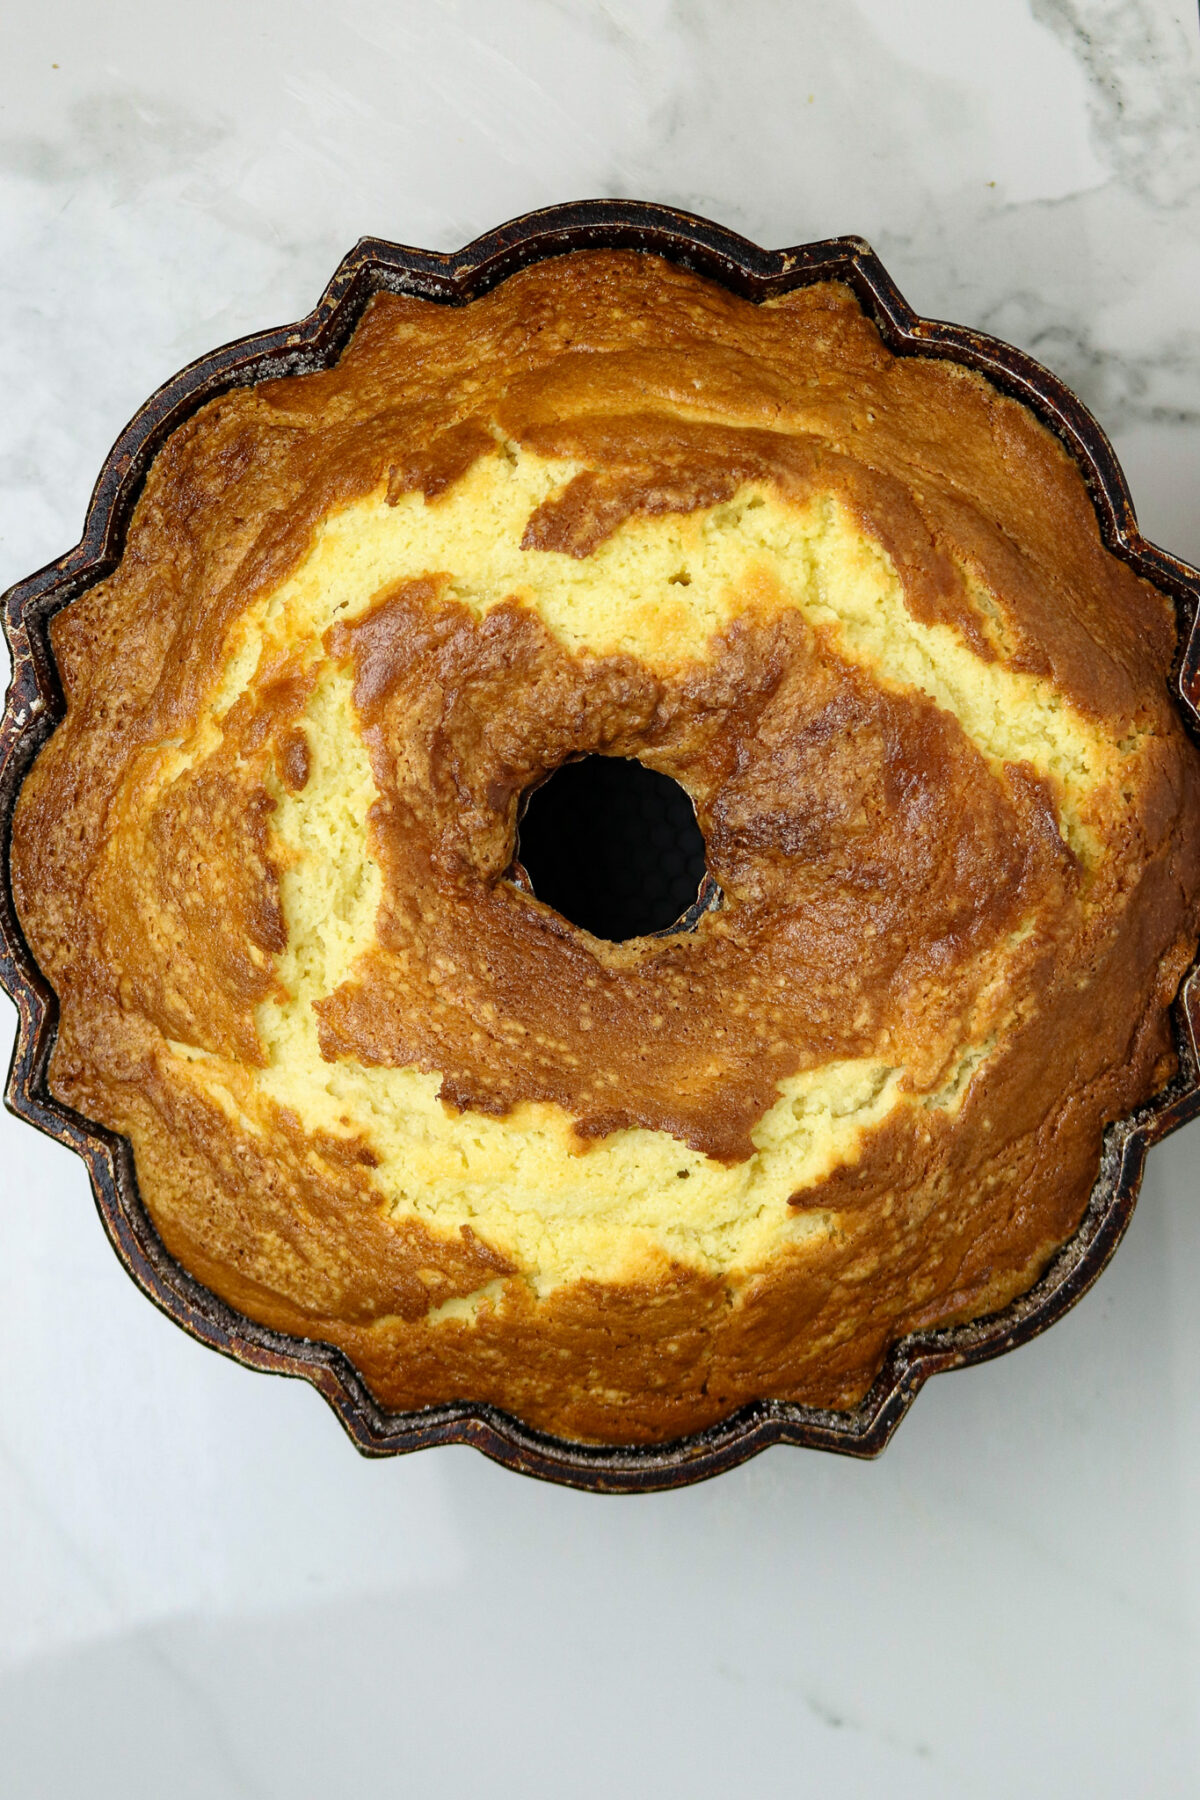 A golden baked cake in a bundt pan.